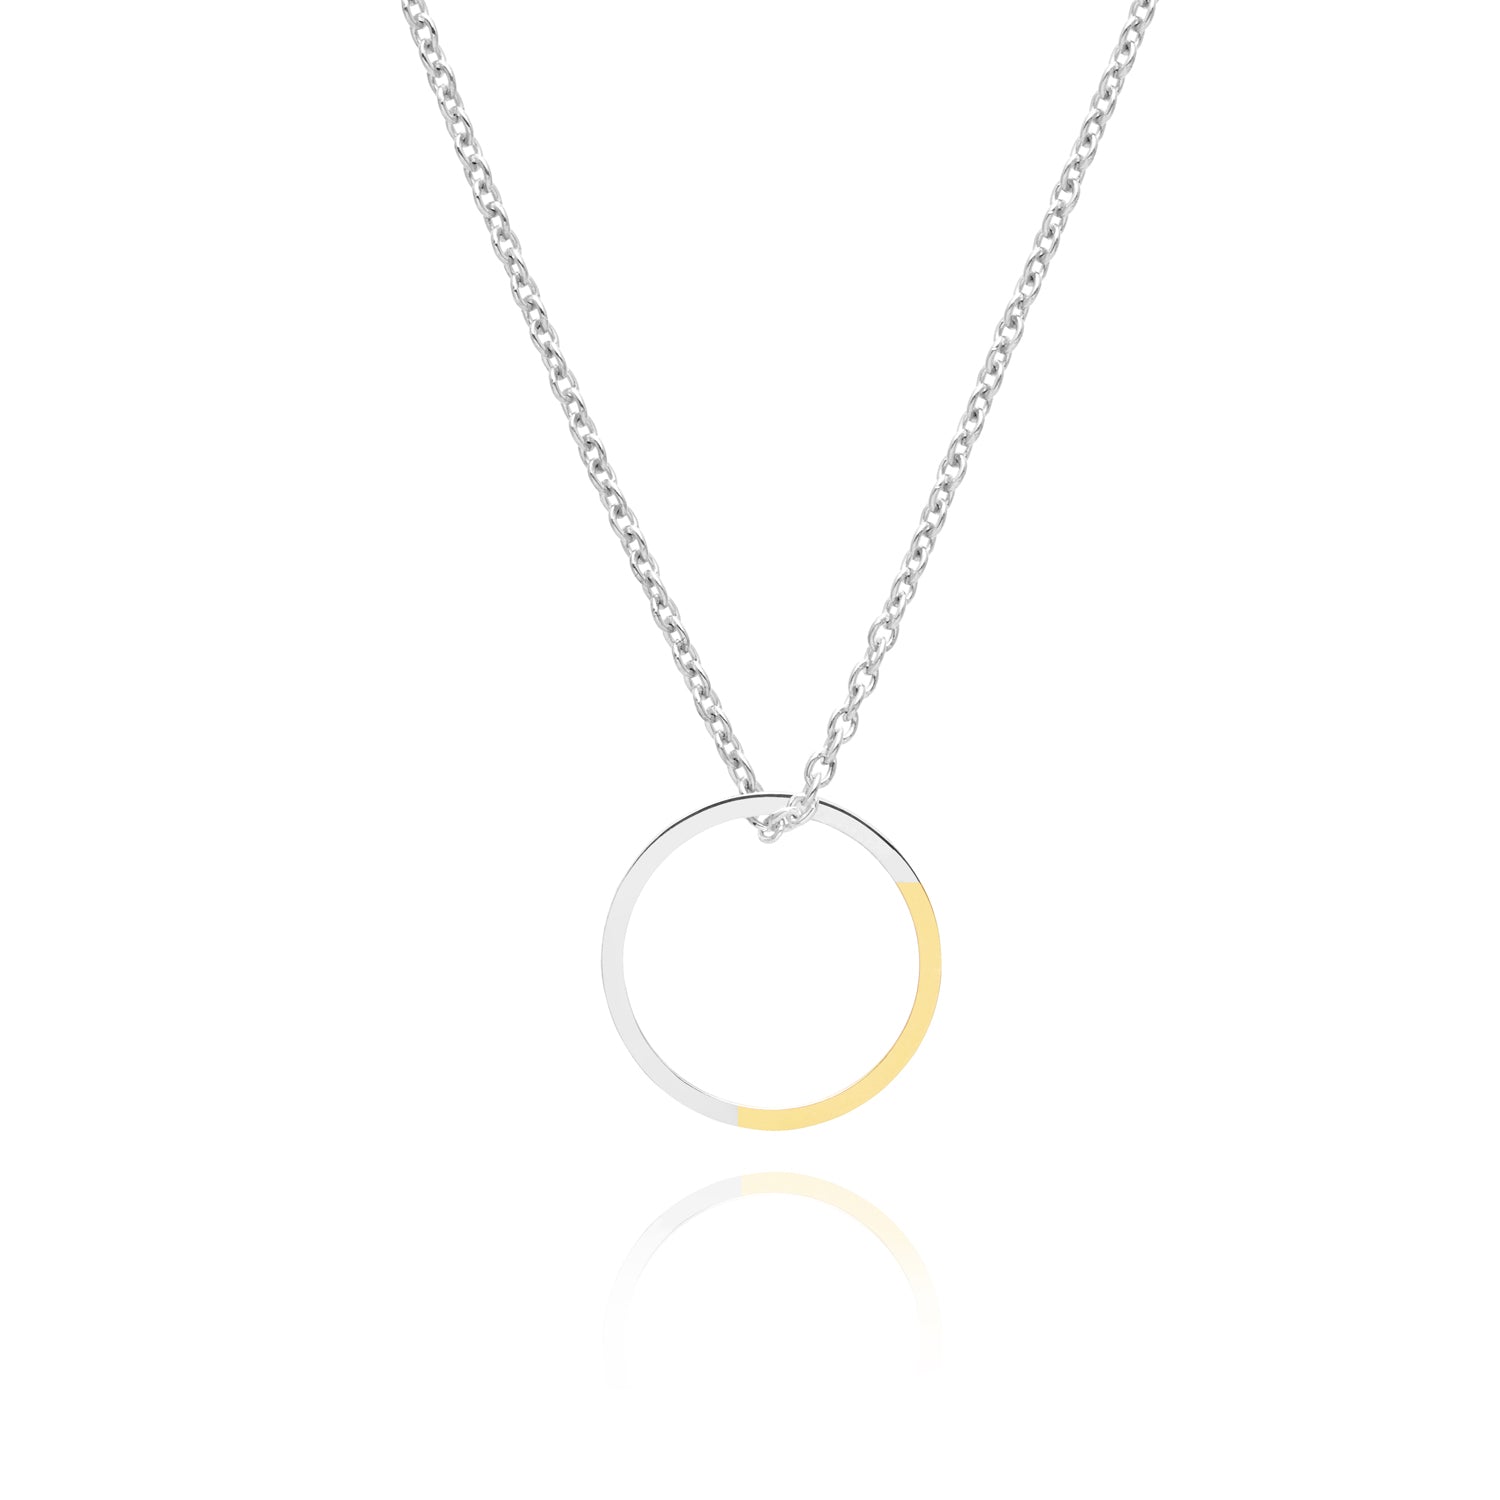 Golden Ratio Circle Necklace - 9k Yellow Gold & Silver